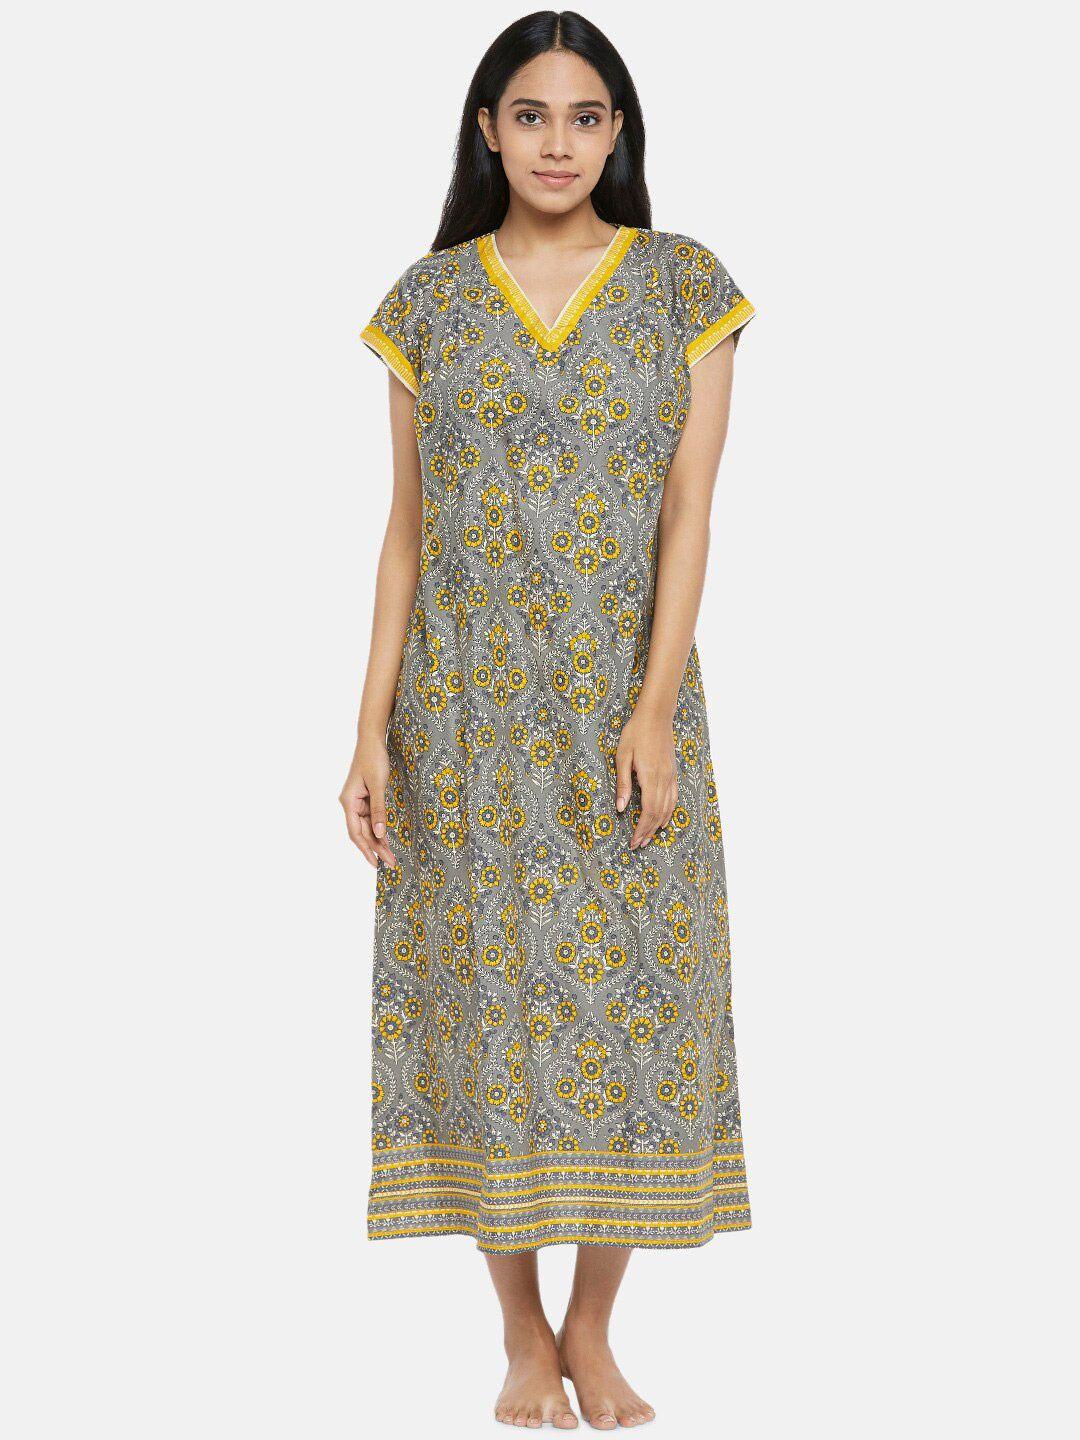 rangmanch by pantaloons women grey & yellow floral printed pure cotton nightdress